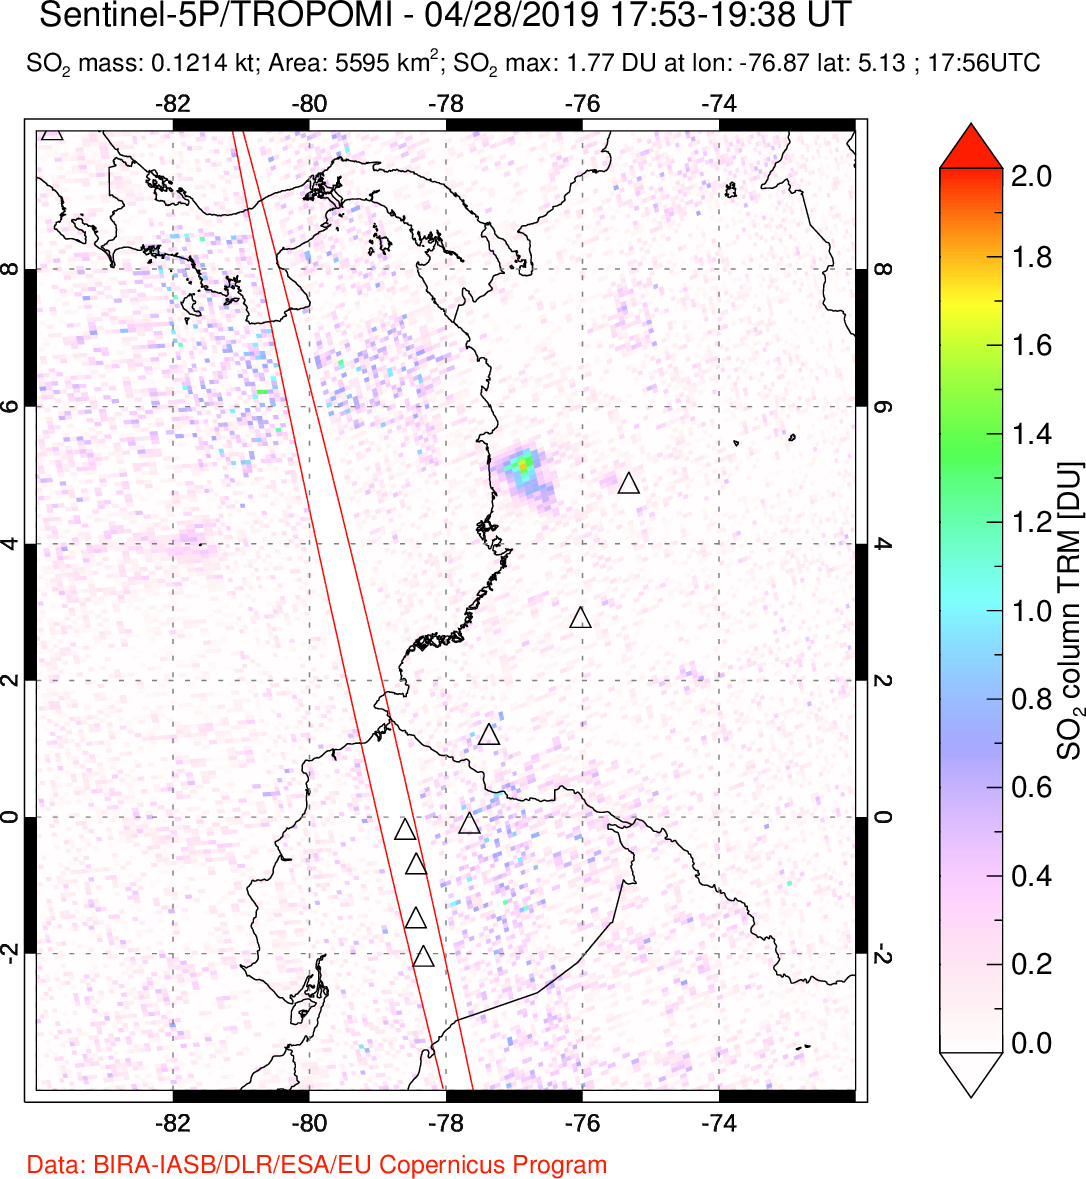 A sulfur dioxide image over Ecuador on Apr 28, 2019.